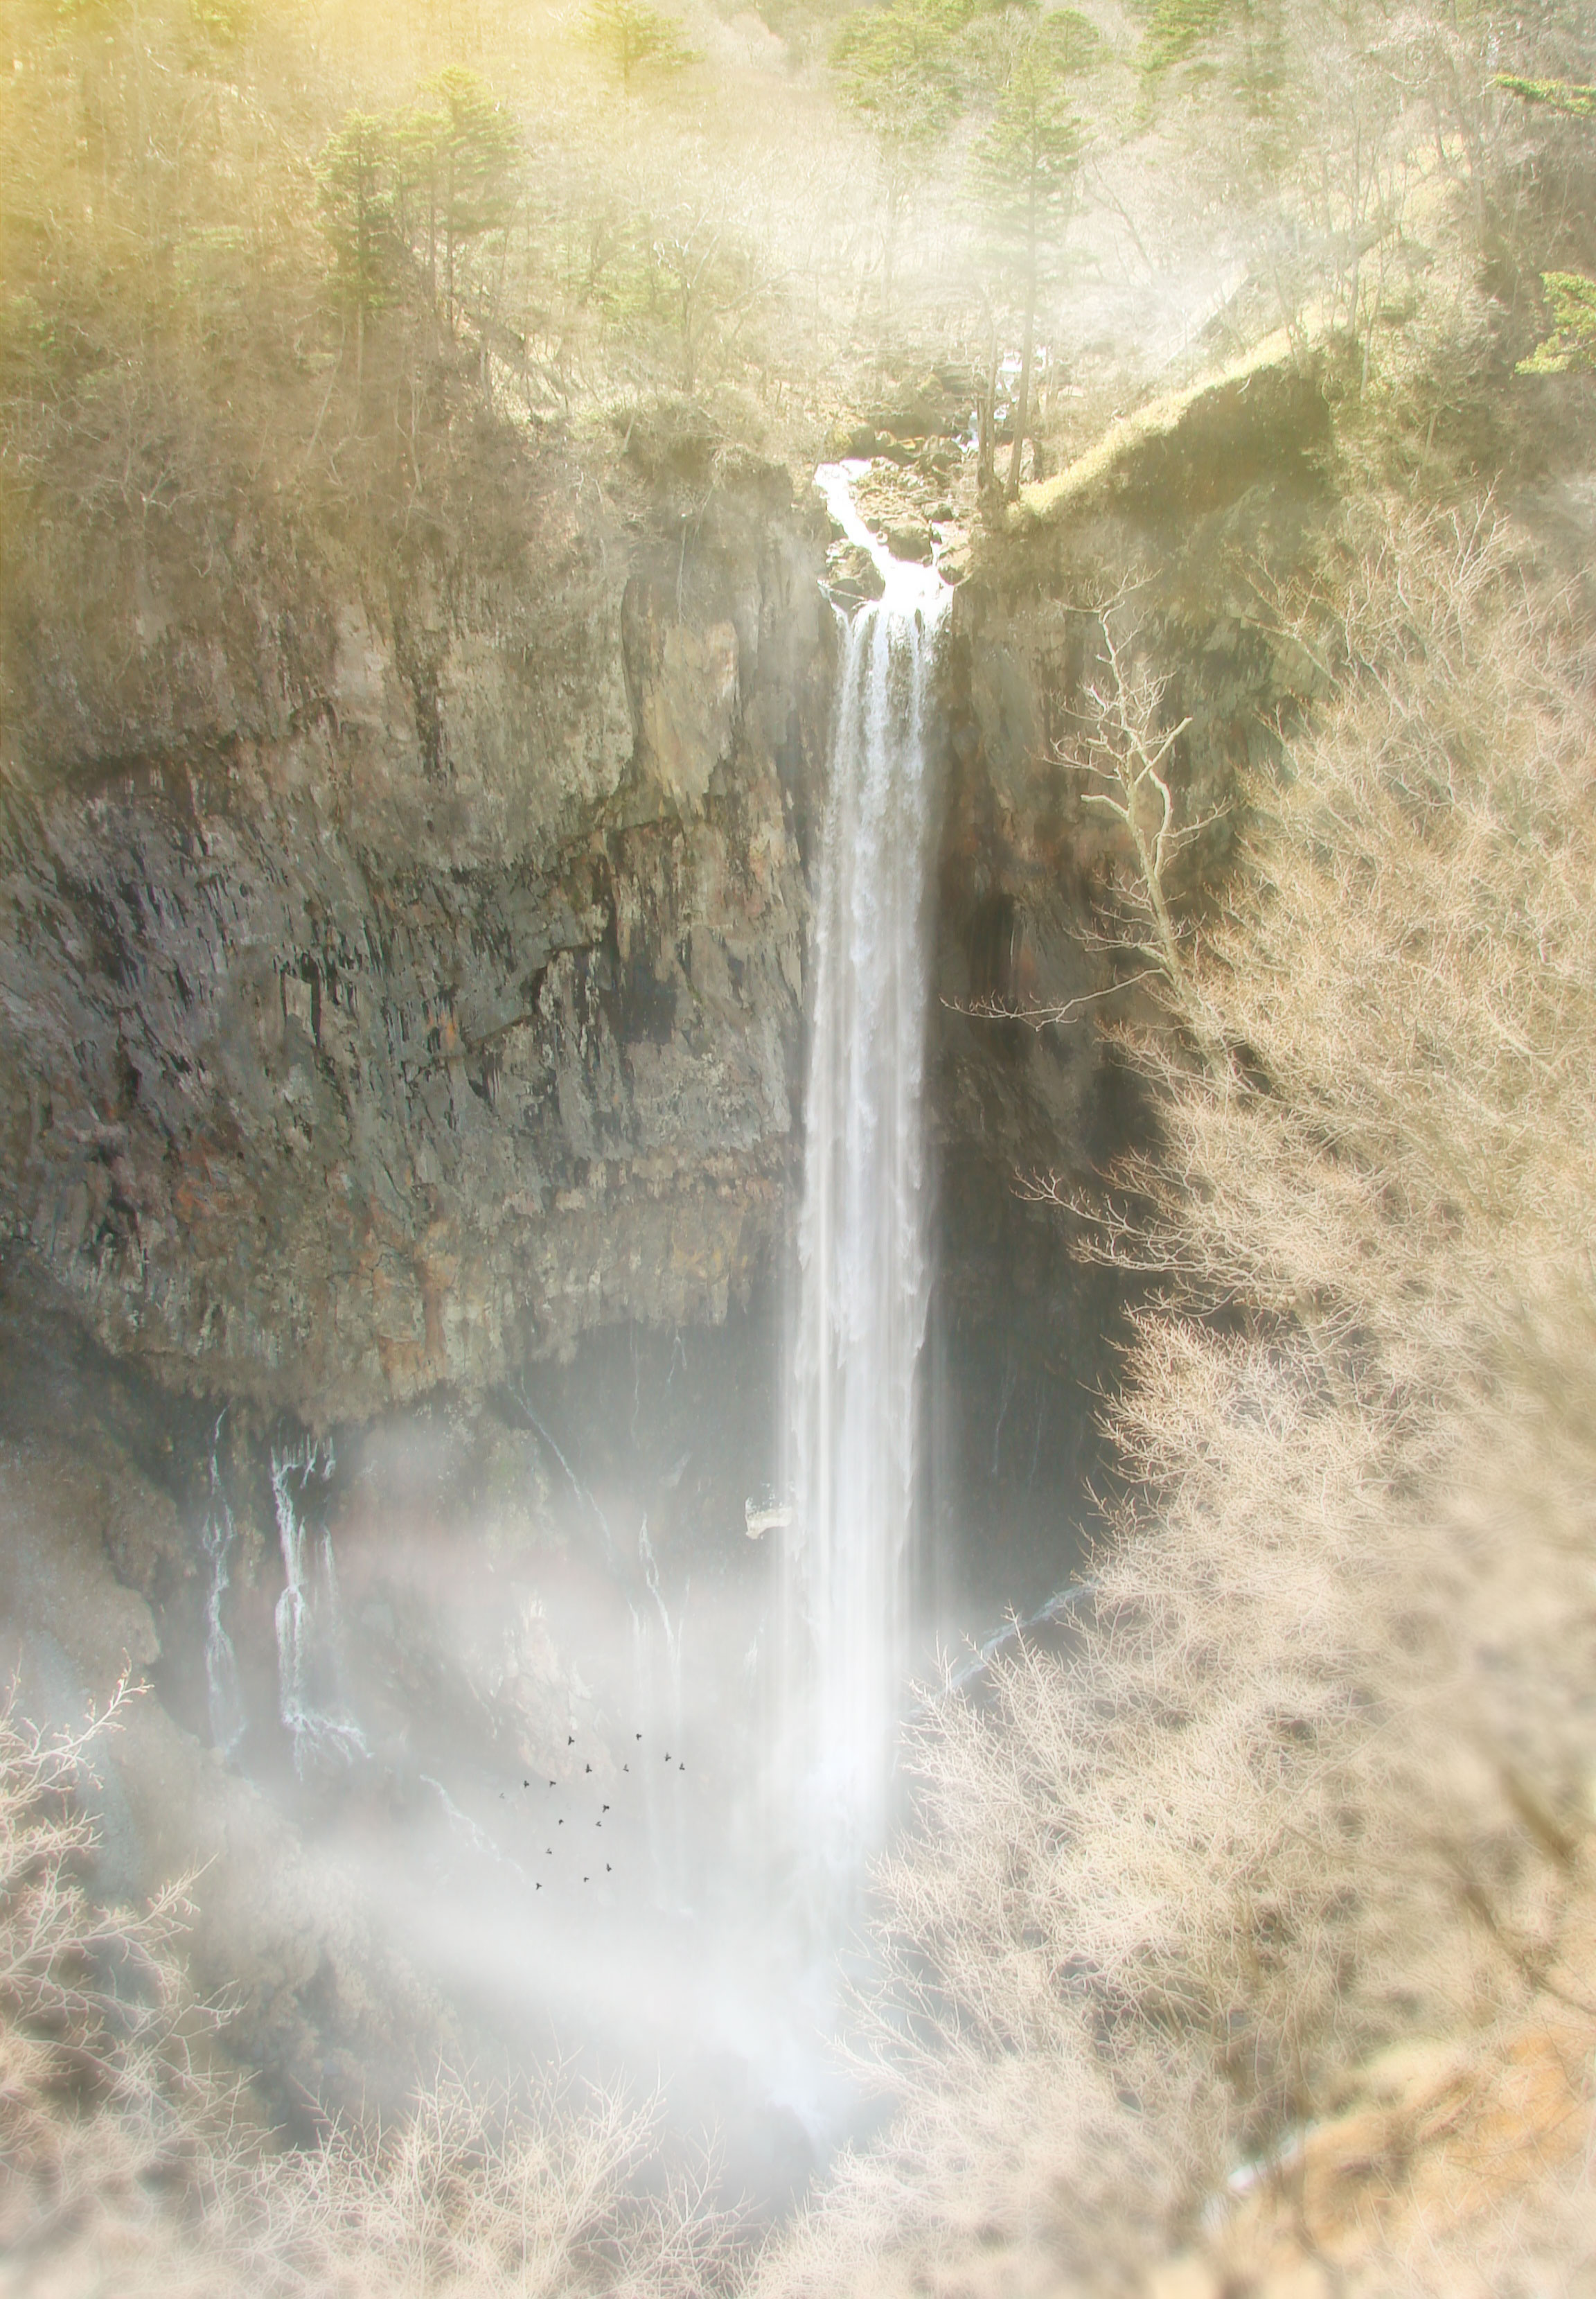 The Kegon waterfalls of Nikko view from above, Japan, (Nos Dren)